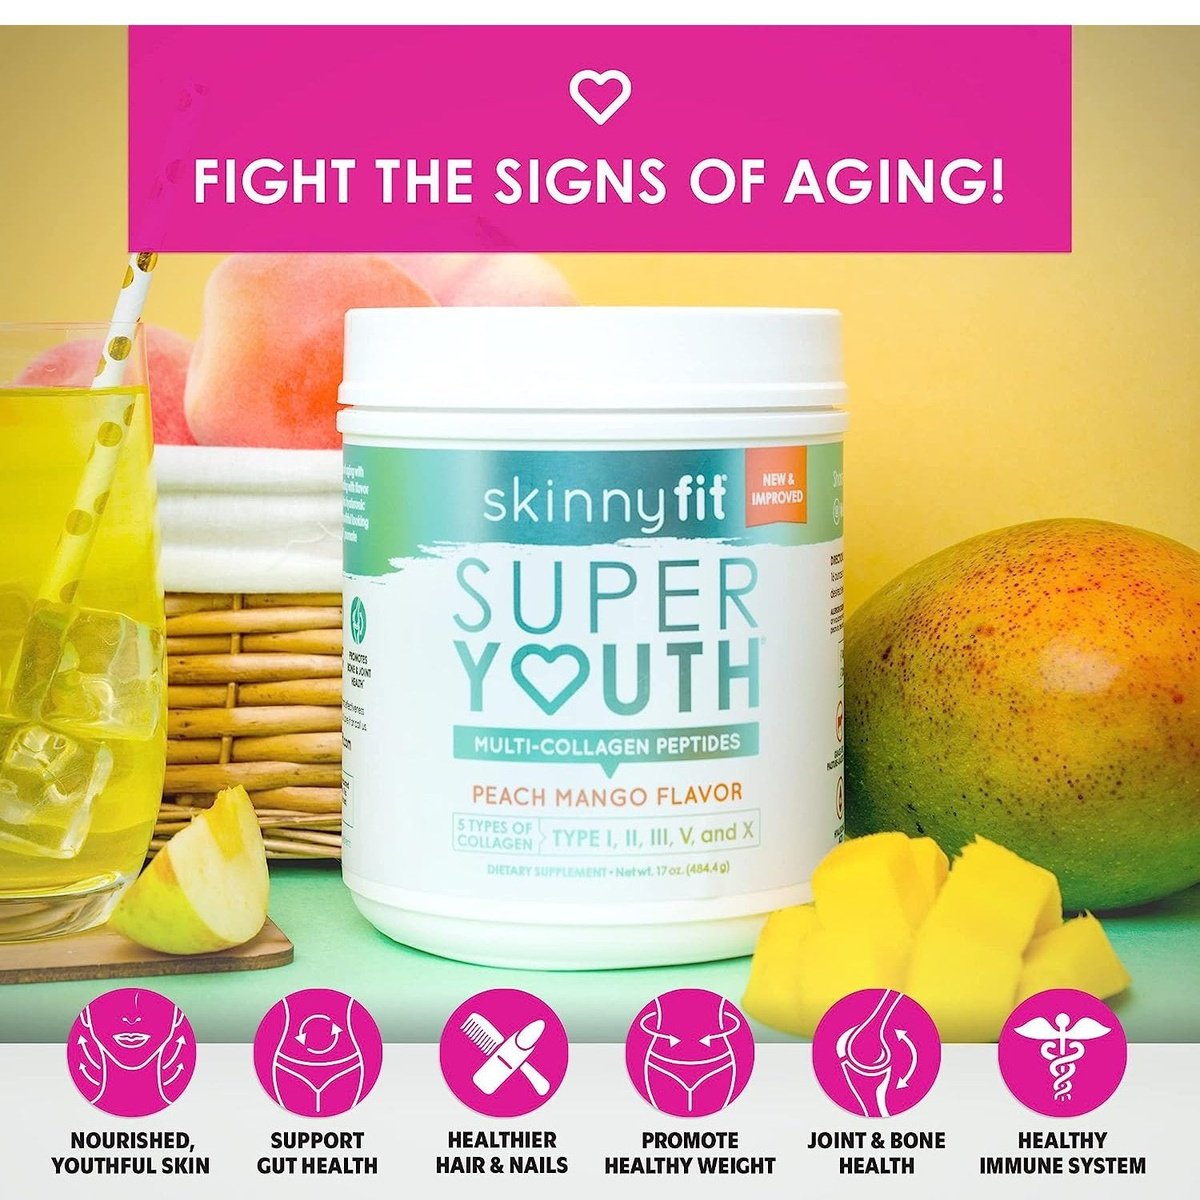 SkinnyFit Super Youth Multi-Collagen Peptides Peach Mango Flavor NEW Skinny Fit